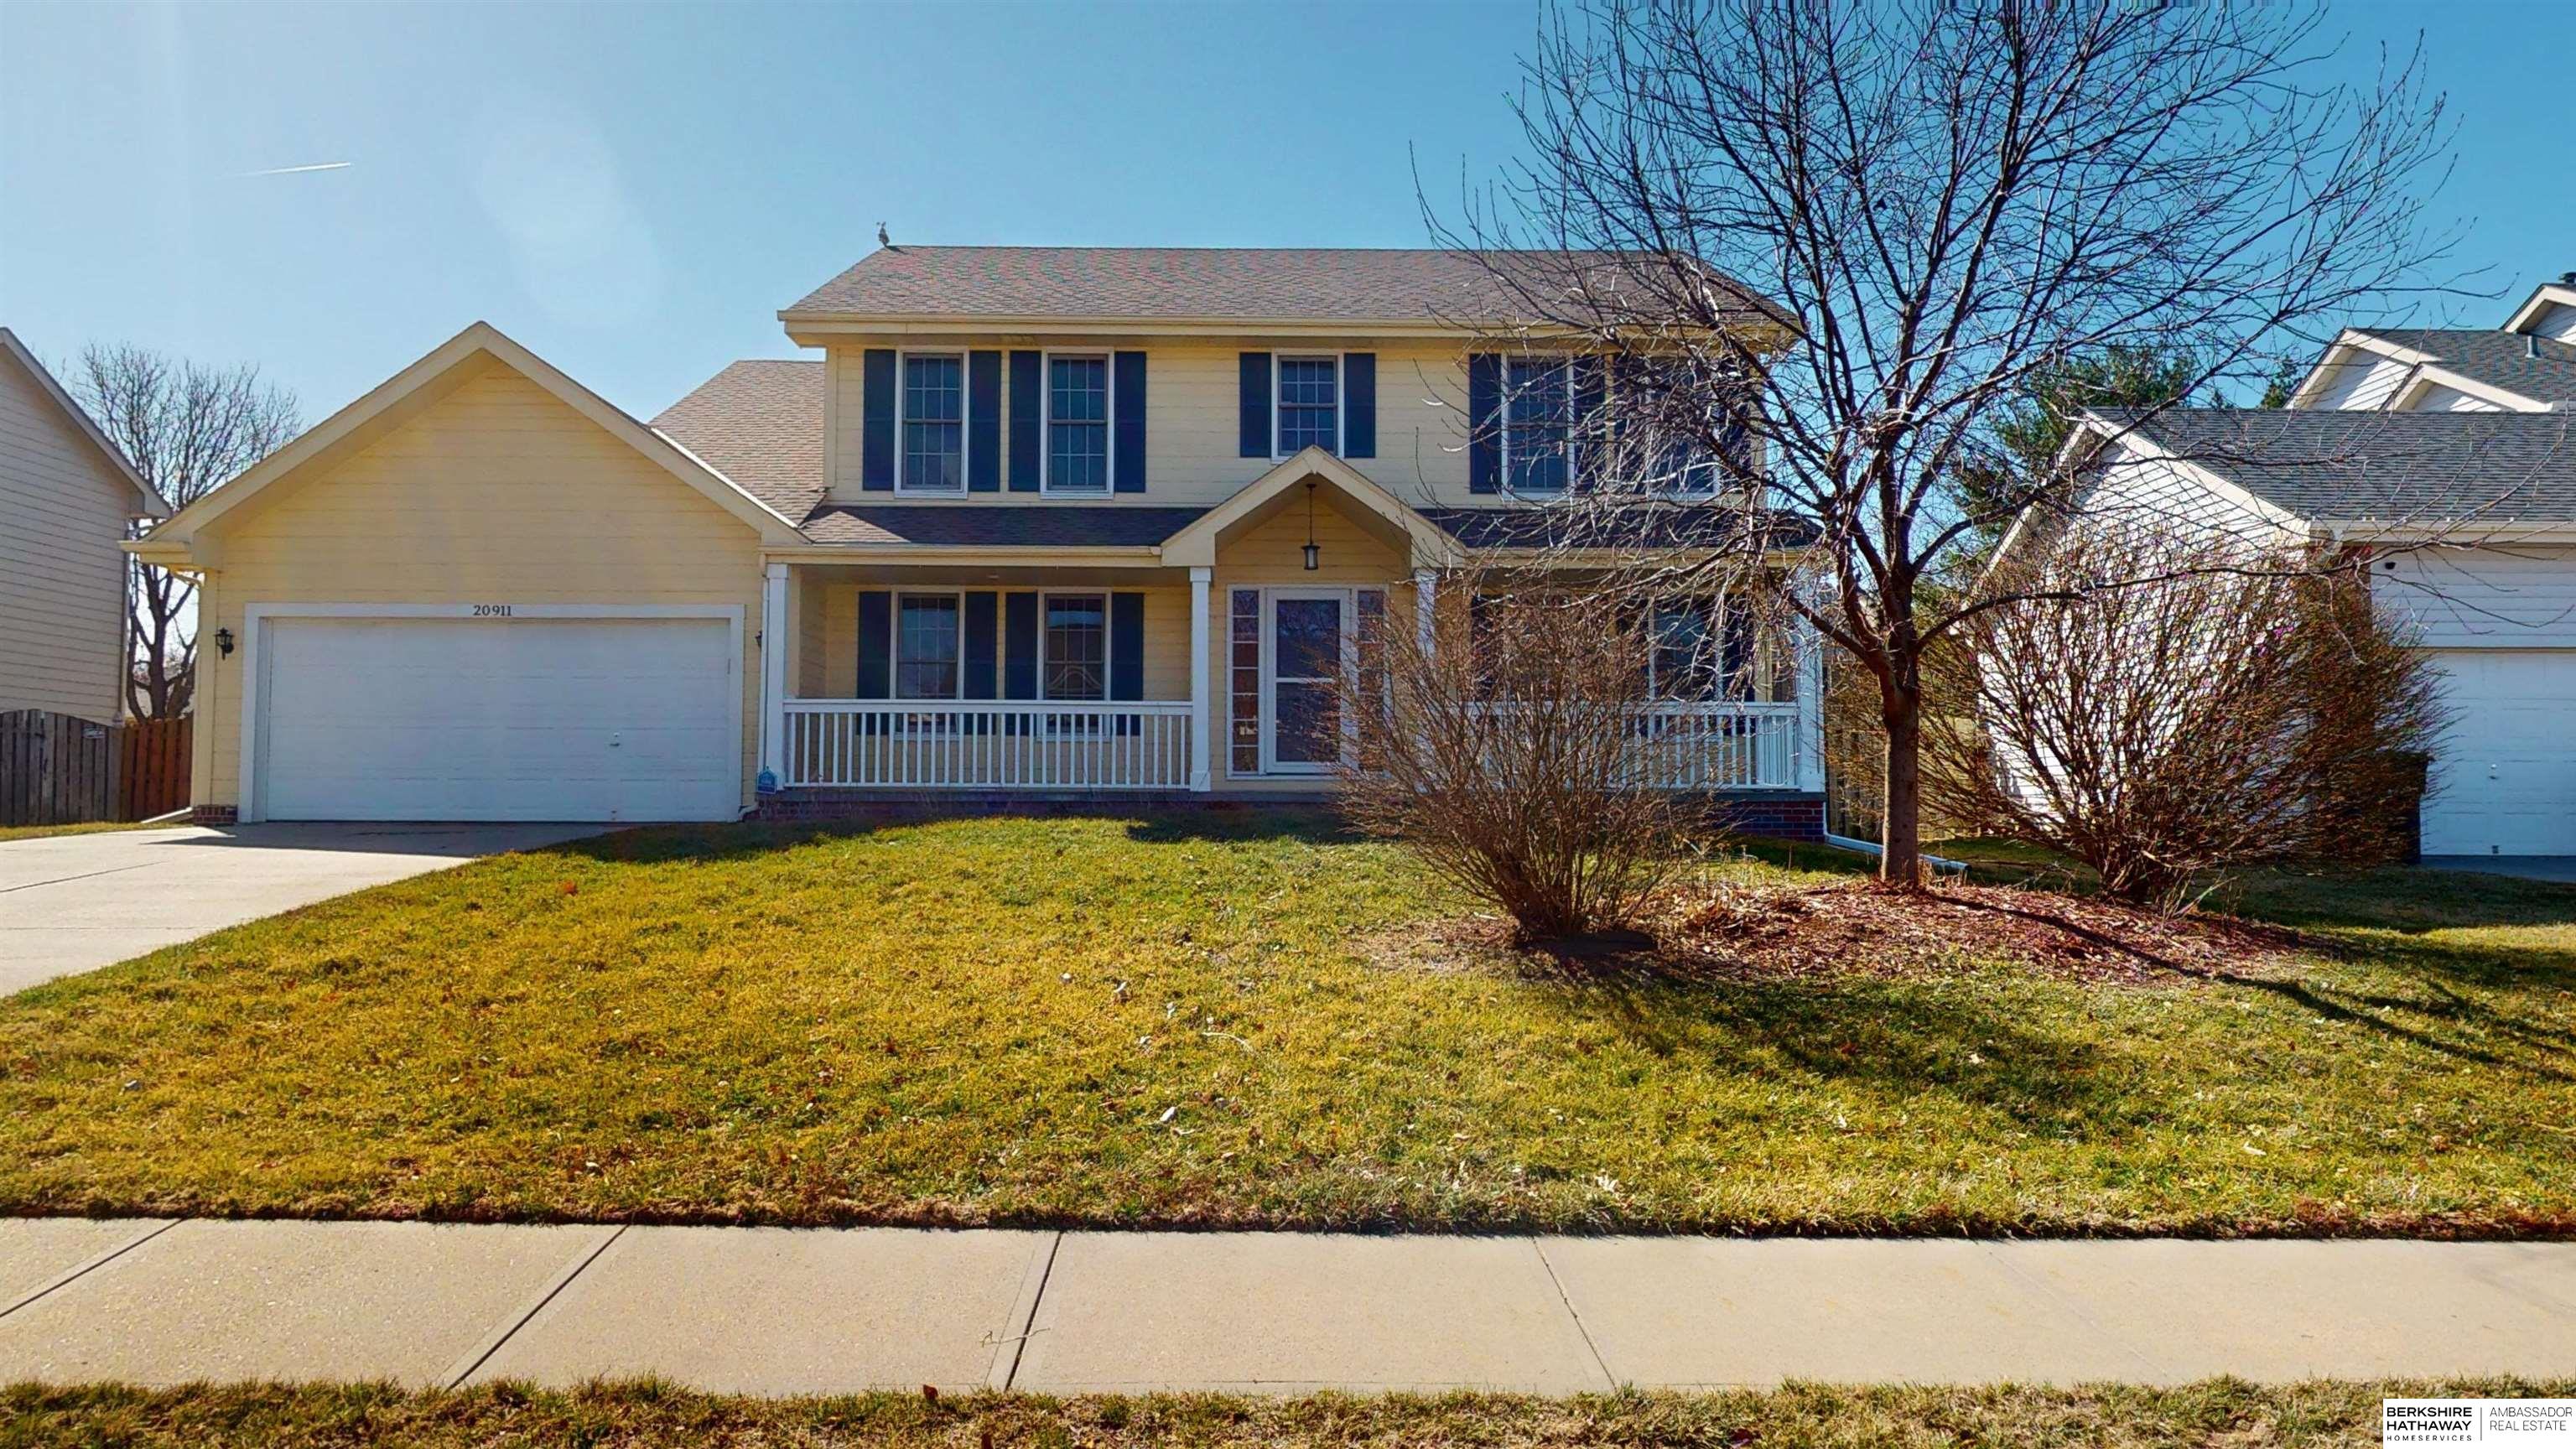 20911 Plum Street Omaha Home Listings - Nancy Heim-berg Real Estate